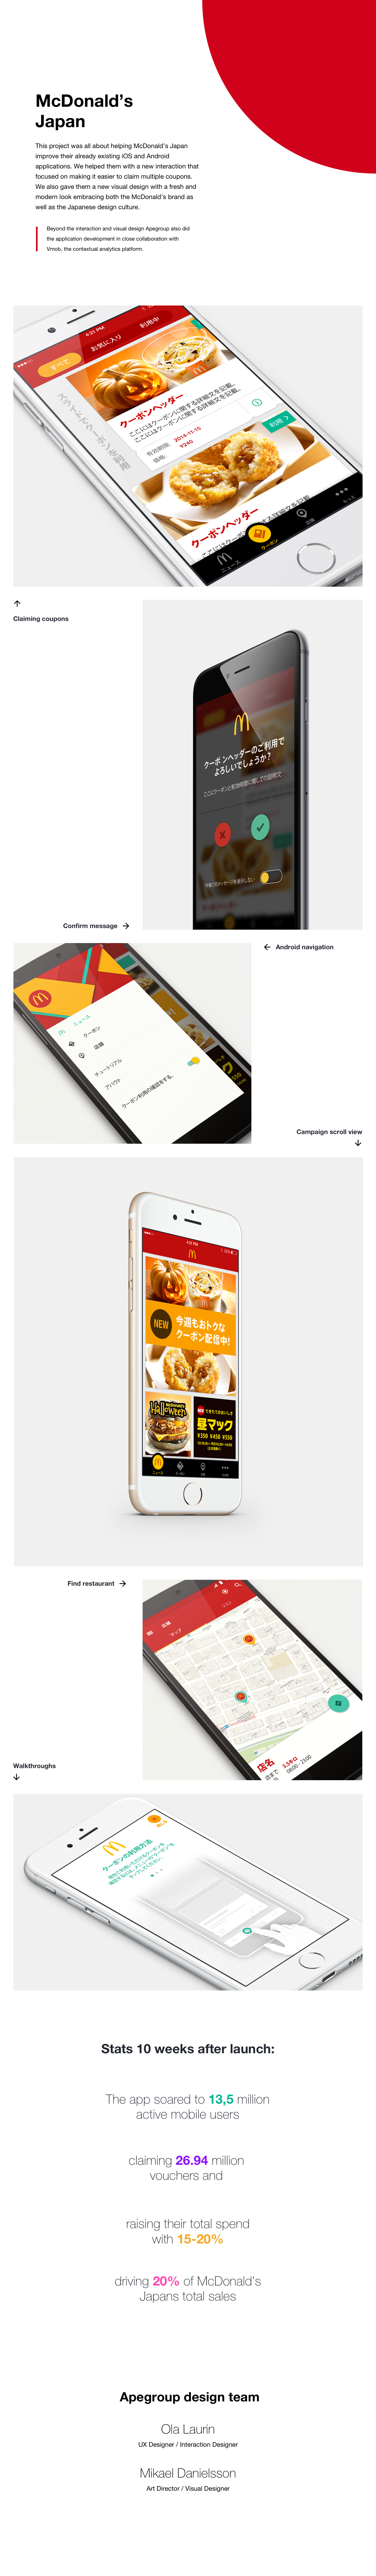 application ios android app digital design mcdonald's japan visual design Interaction design  art direction 